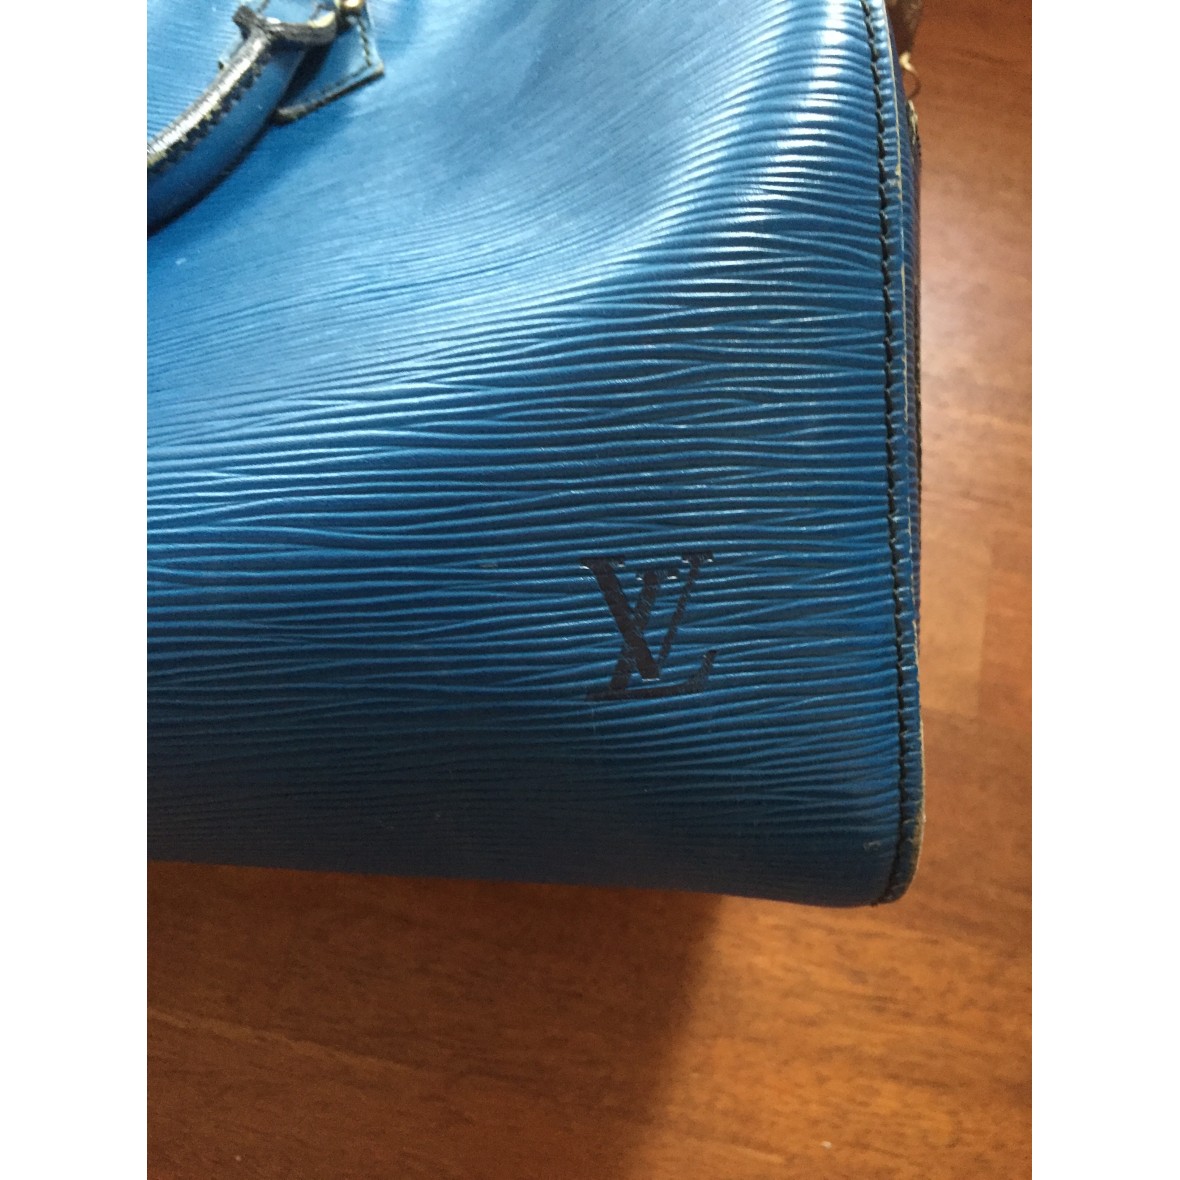 Louis Vuitton Speedy 35 Second Handed Price